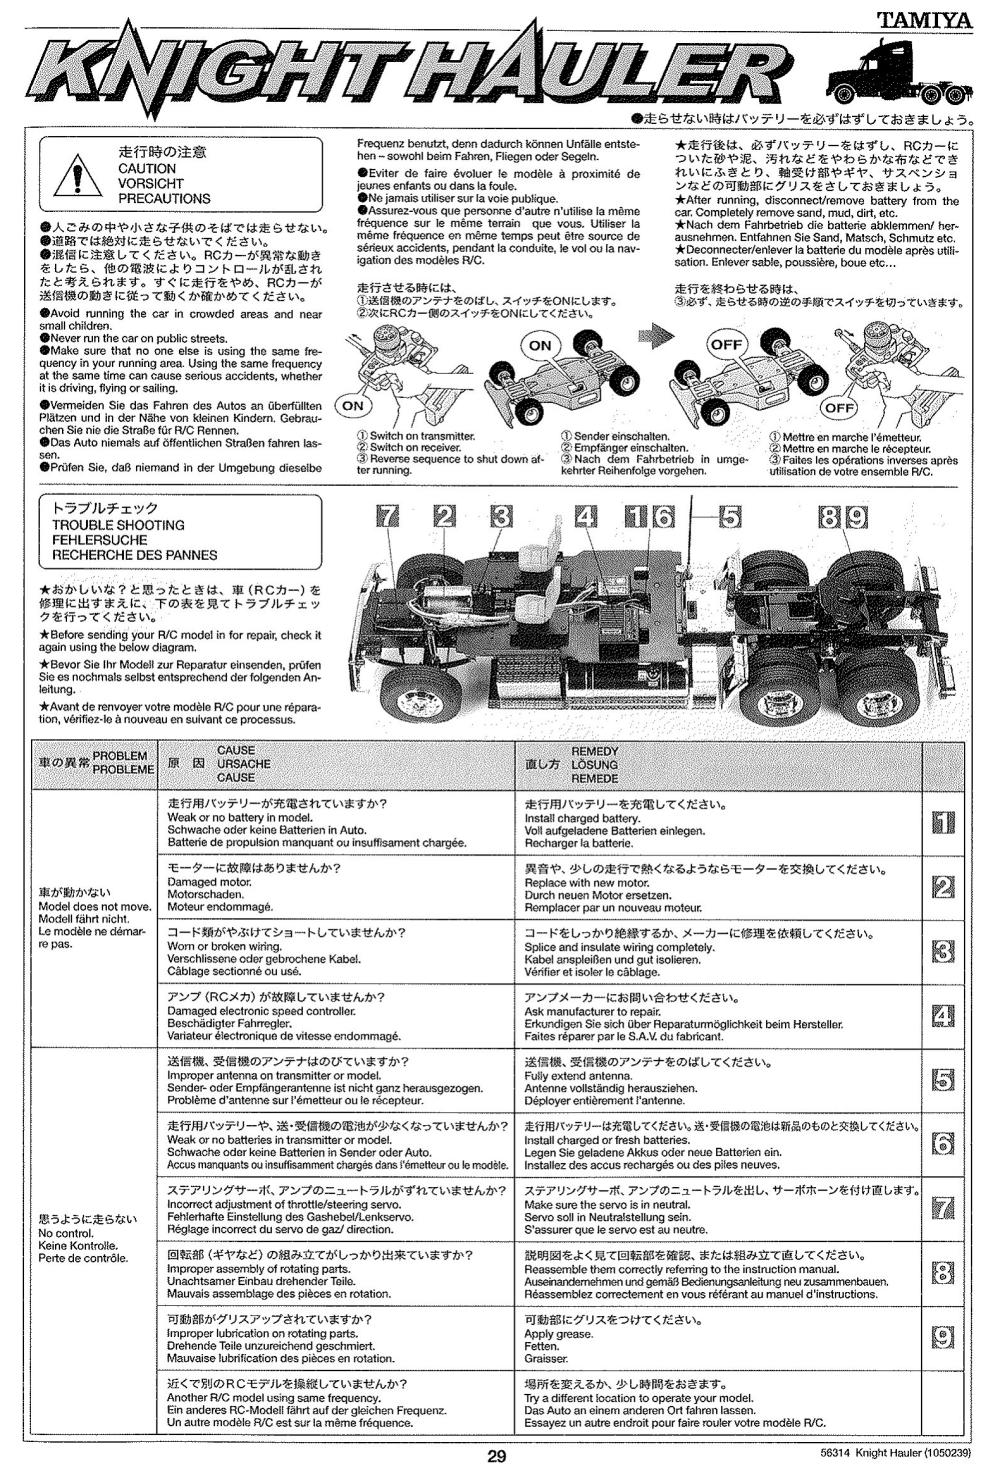 Tamiya - Knight Hauler Tractor Truck Chassis - Manual - Page 29